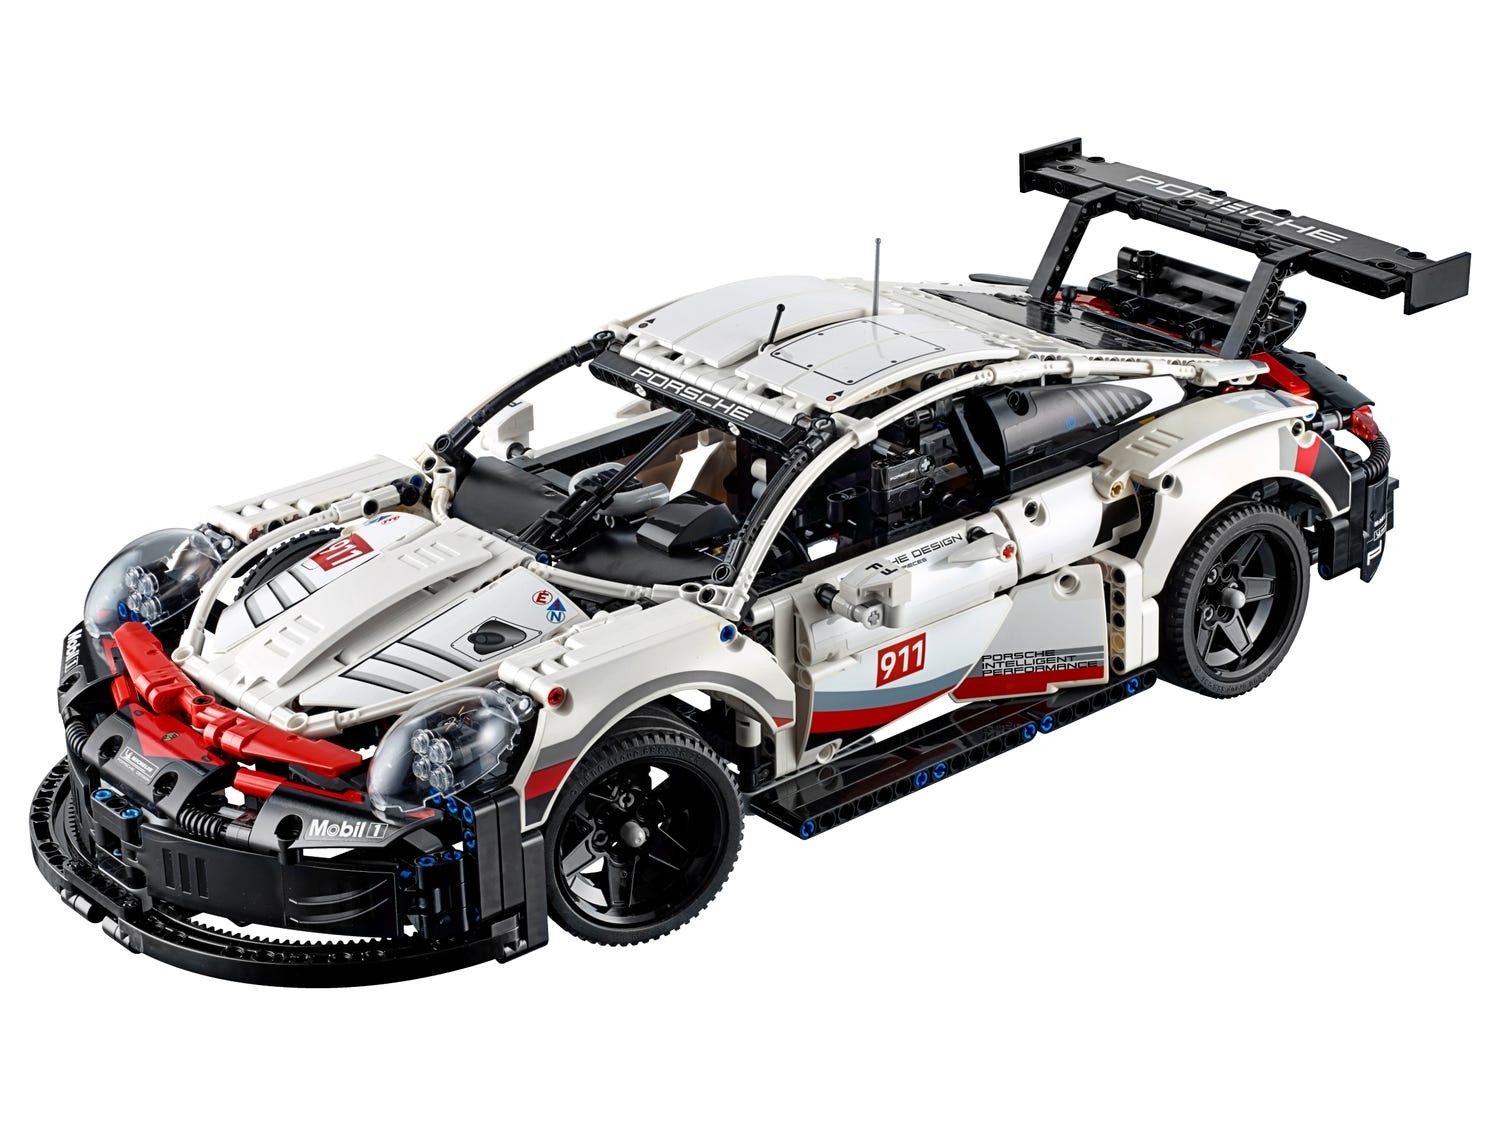 Lego 42096 technic porsche 911 rsr race car advanced building set, exclusive collectible model, standard, brand new, sealed